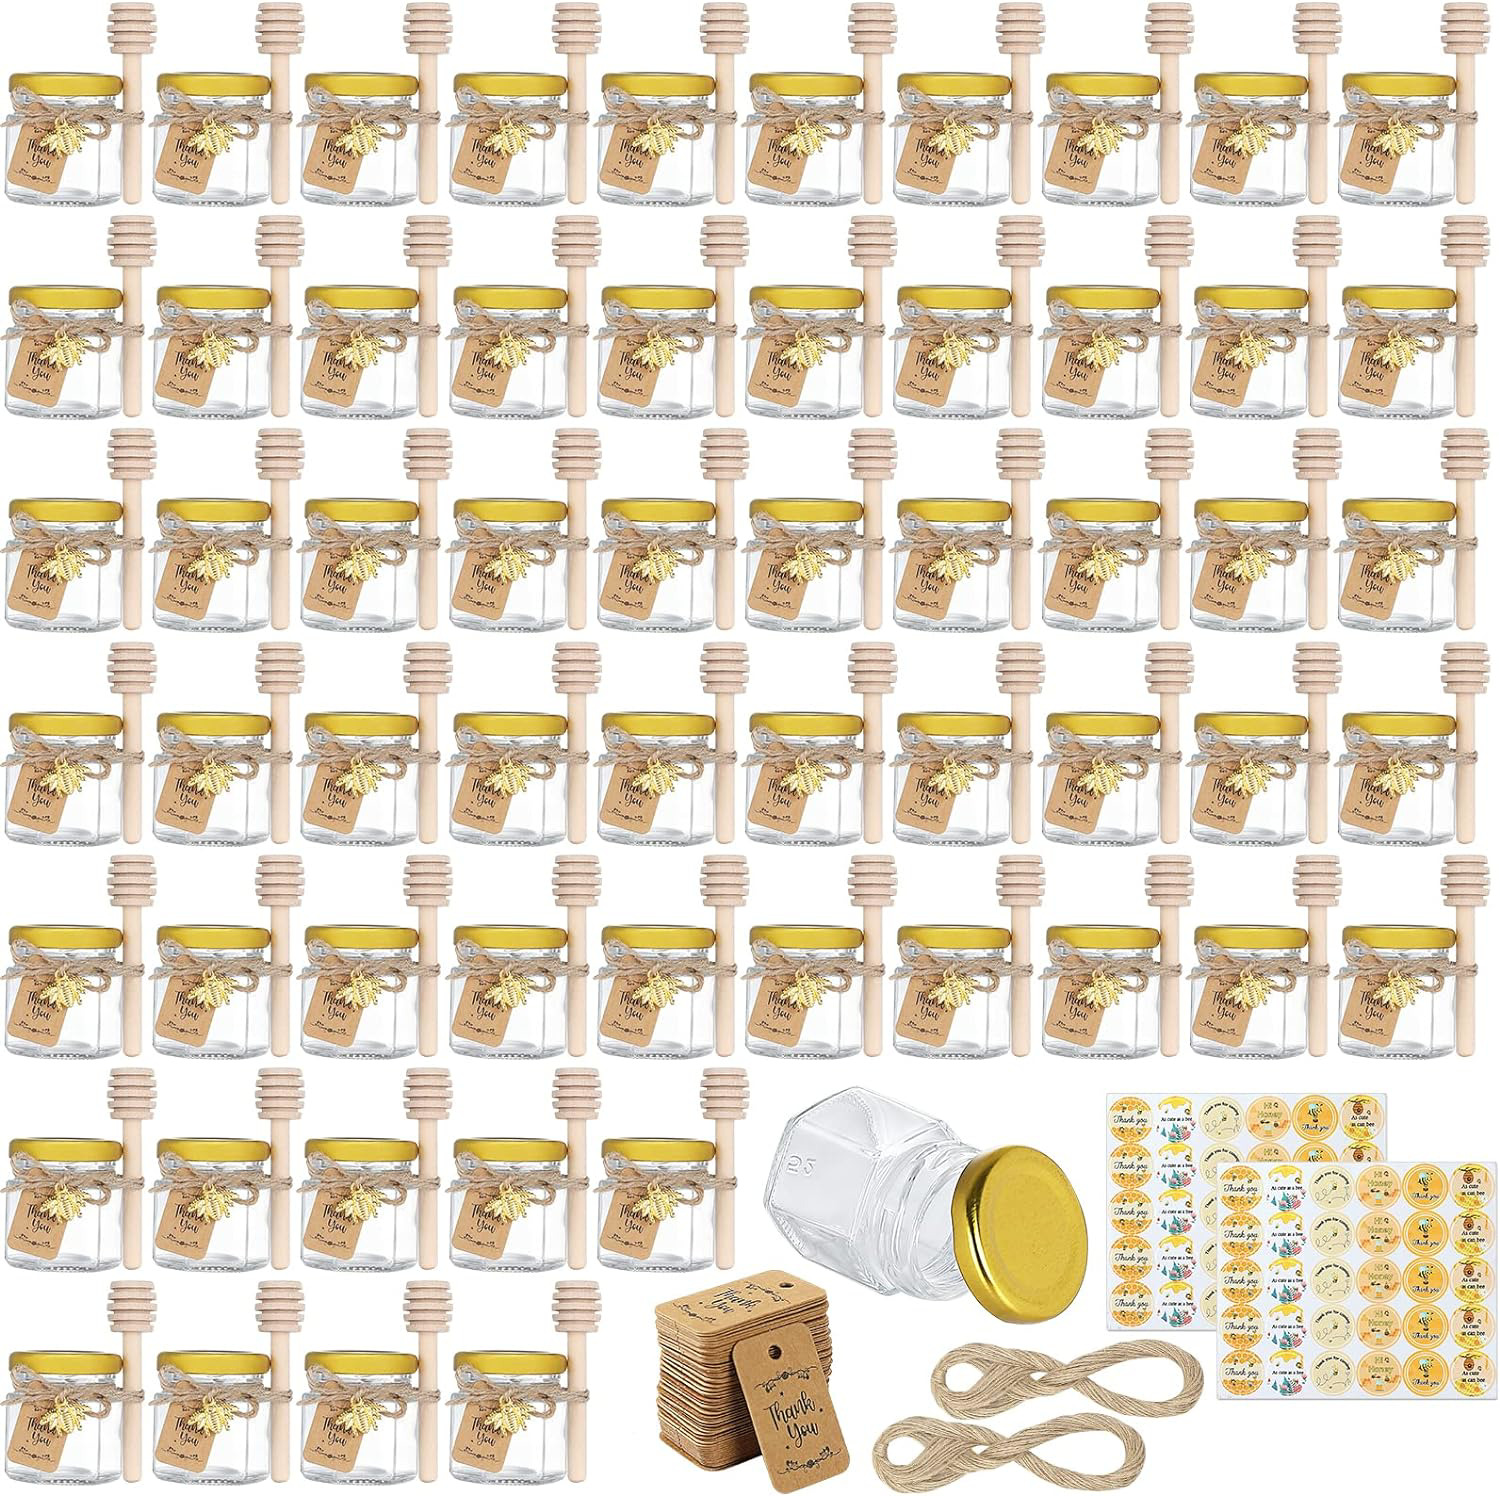 CRTWDMAN 60 Pack Mini Honey Jars,1.5 oz Glass Honey Jars with Metal Lids,Wooden